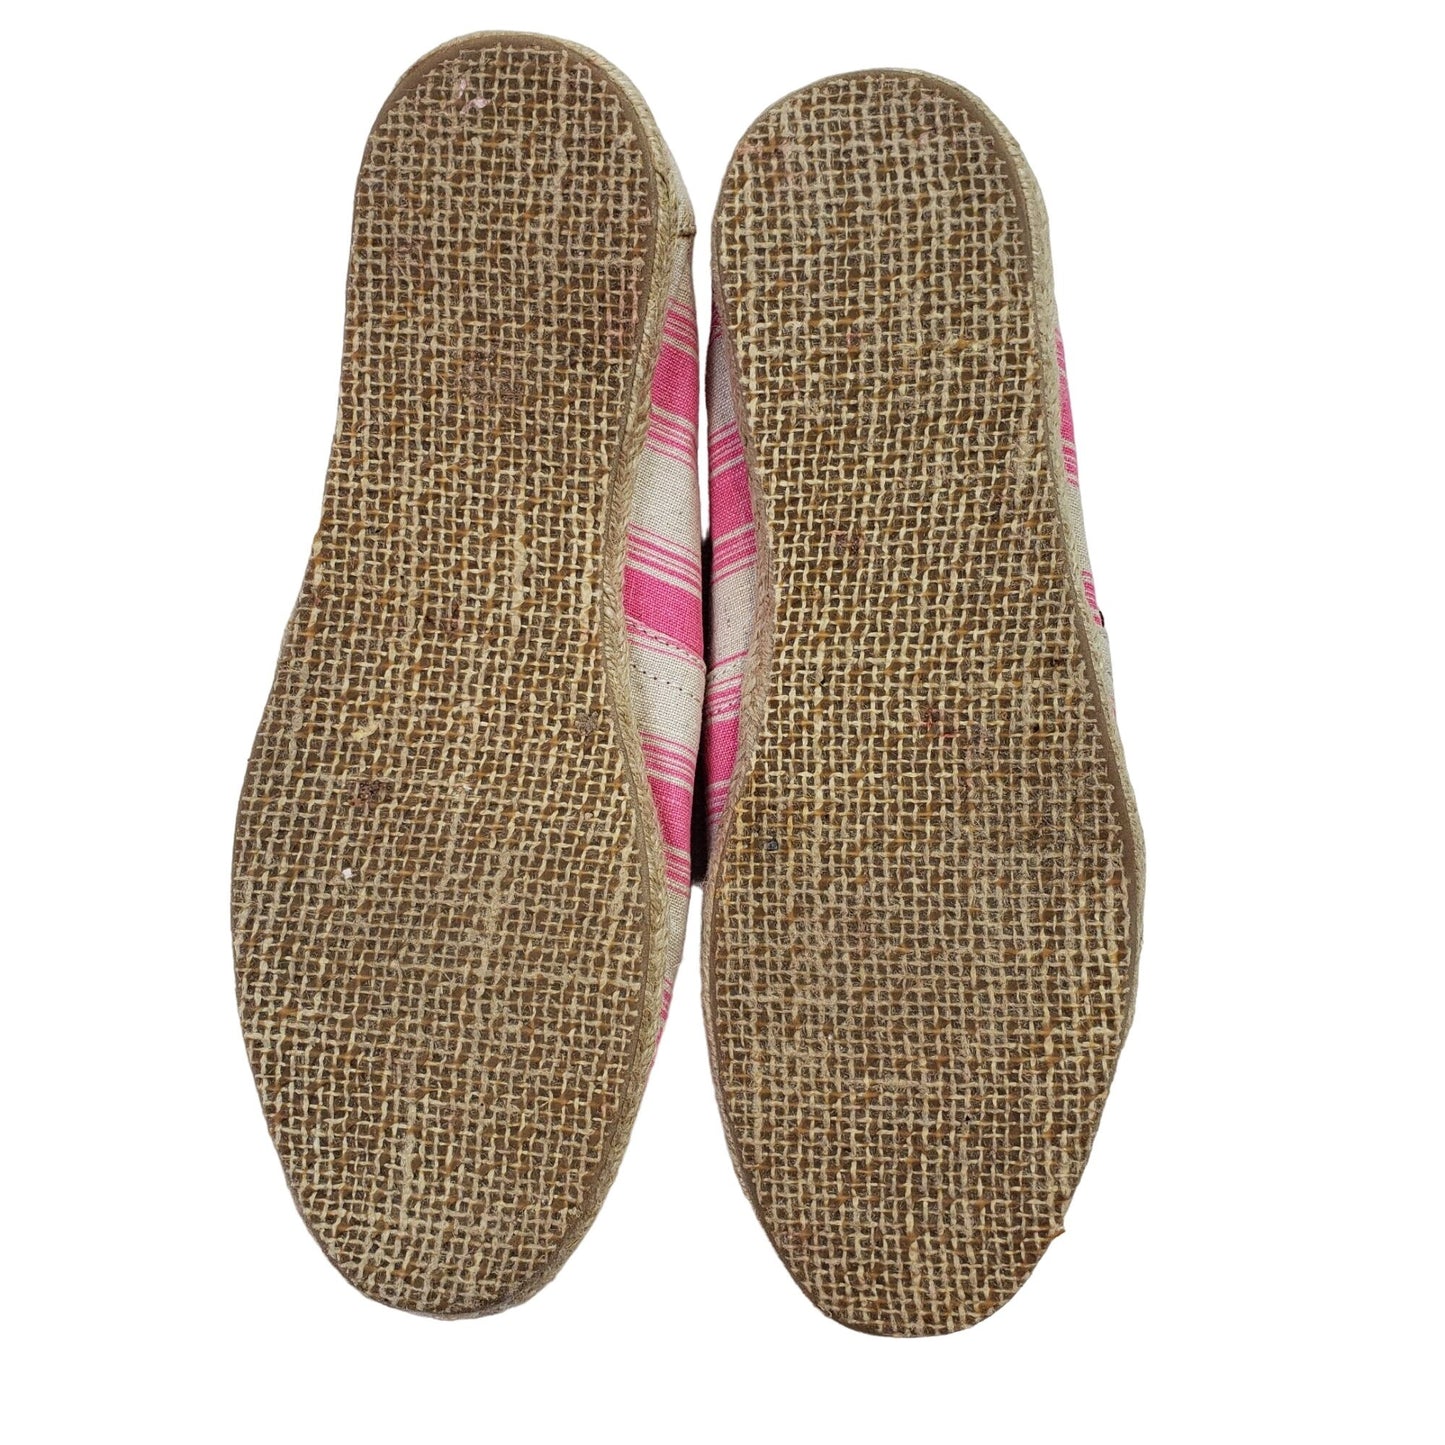 Toms Apalgarta Pink & Cream Striped Shoes Size 9.5